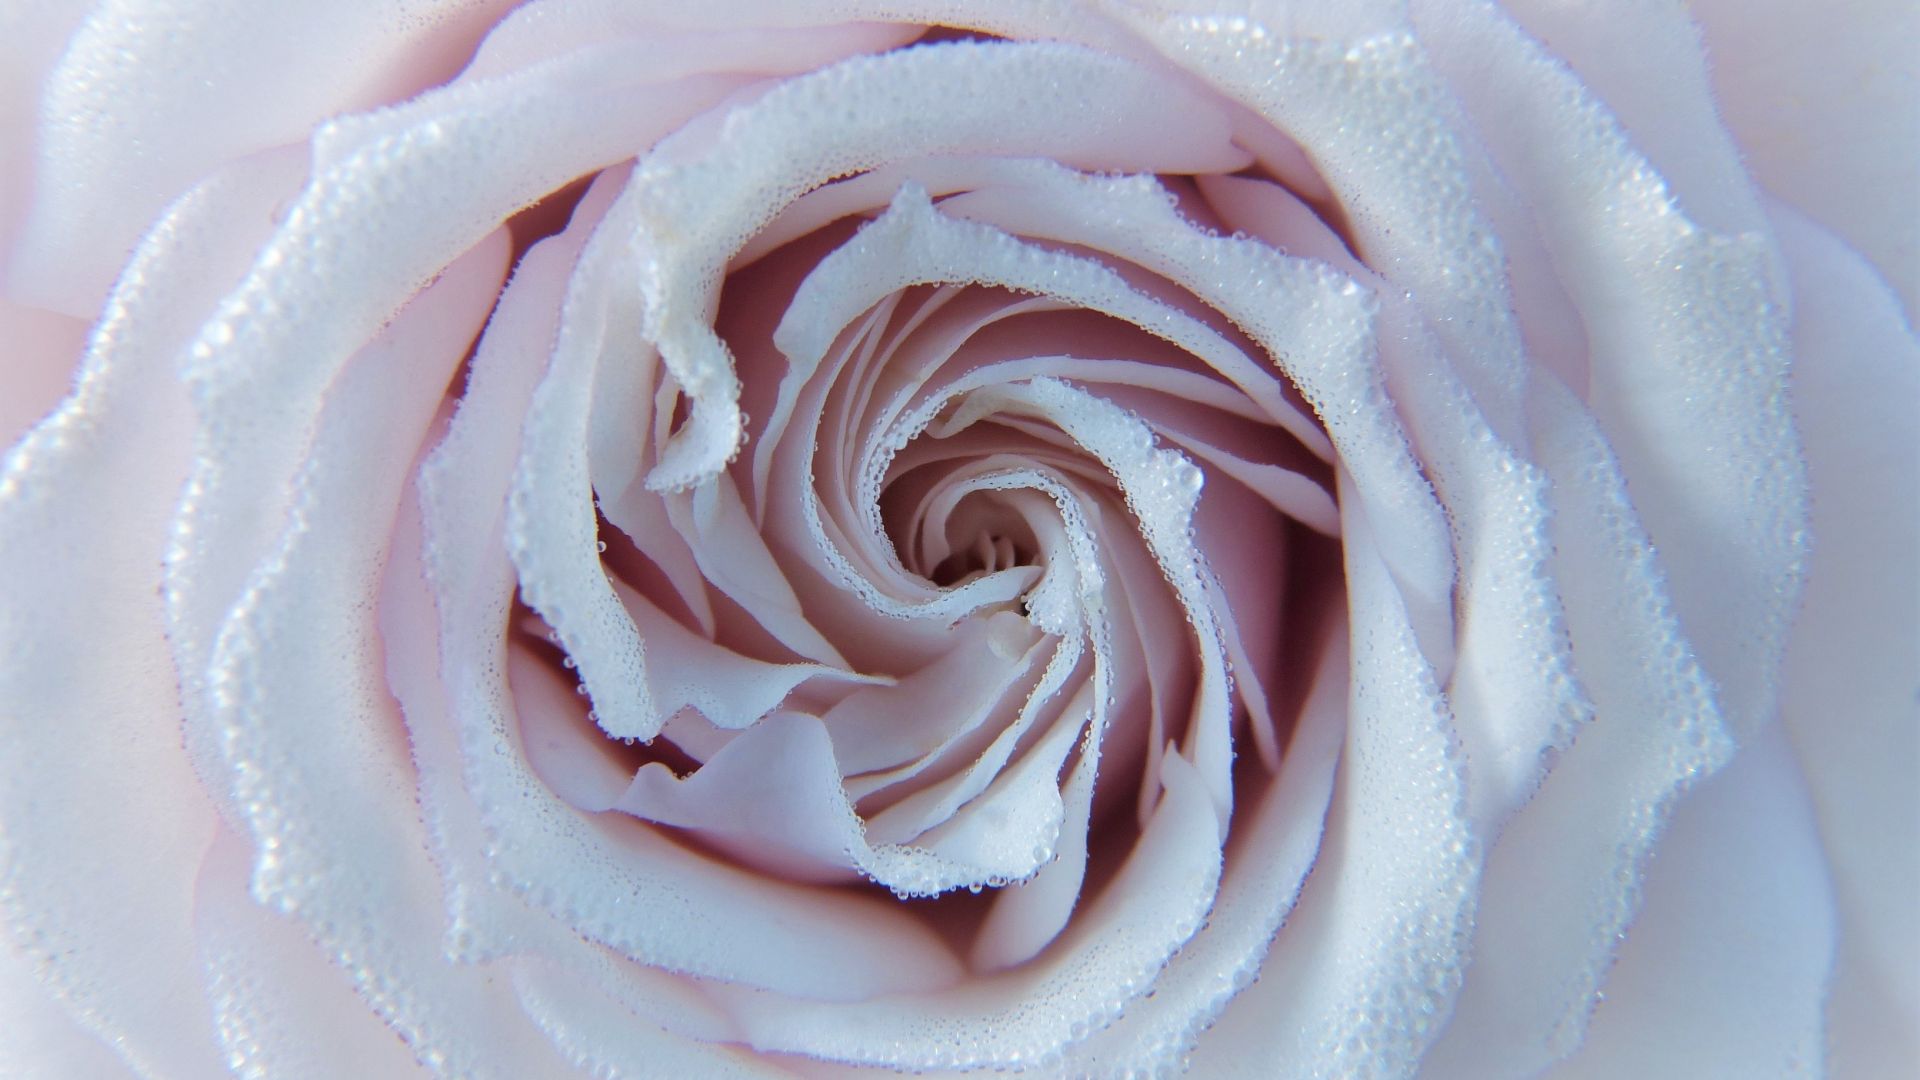 Wallpaper Rose, white pink flower, close up